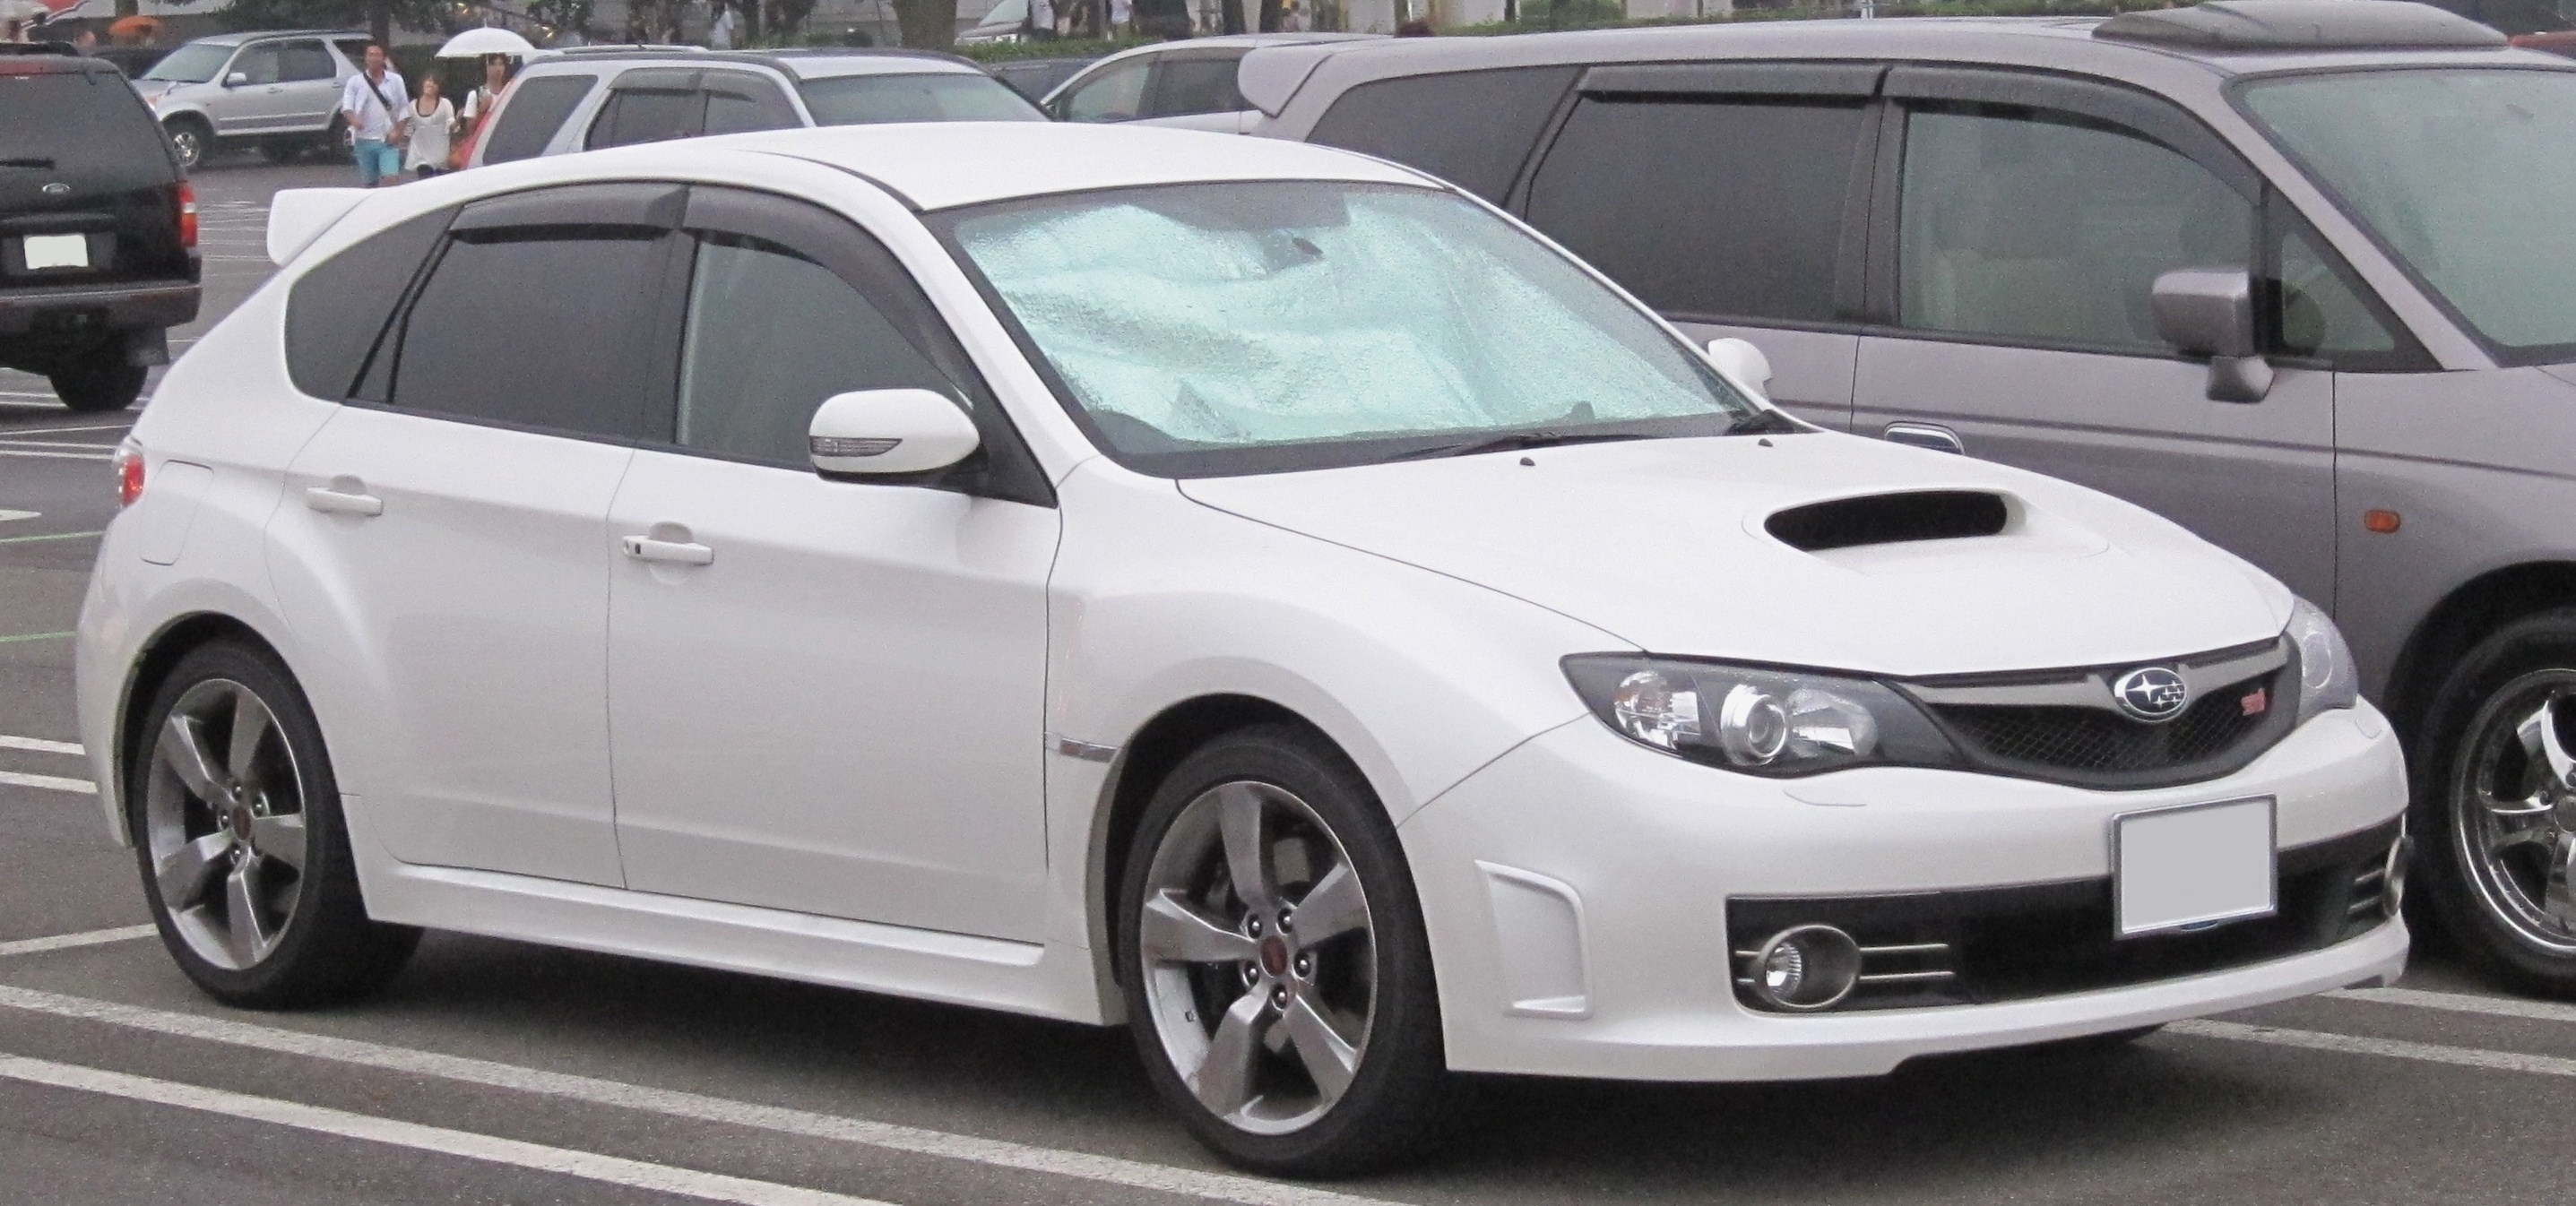 File:3Rd Generation Subaru Impreza Wrx Sti.Jpg - Wikimedia Commons